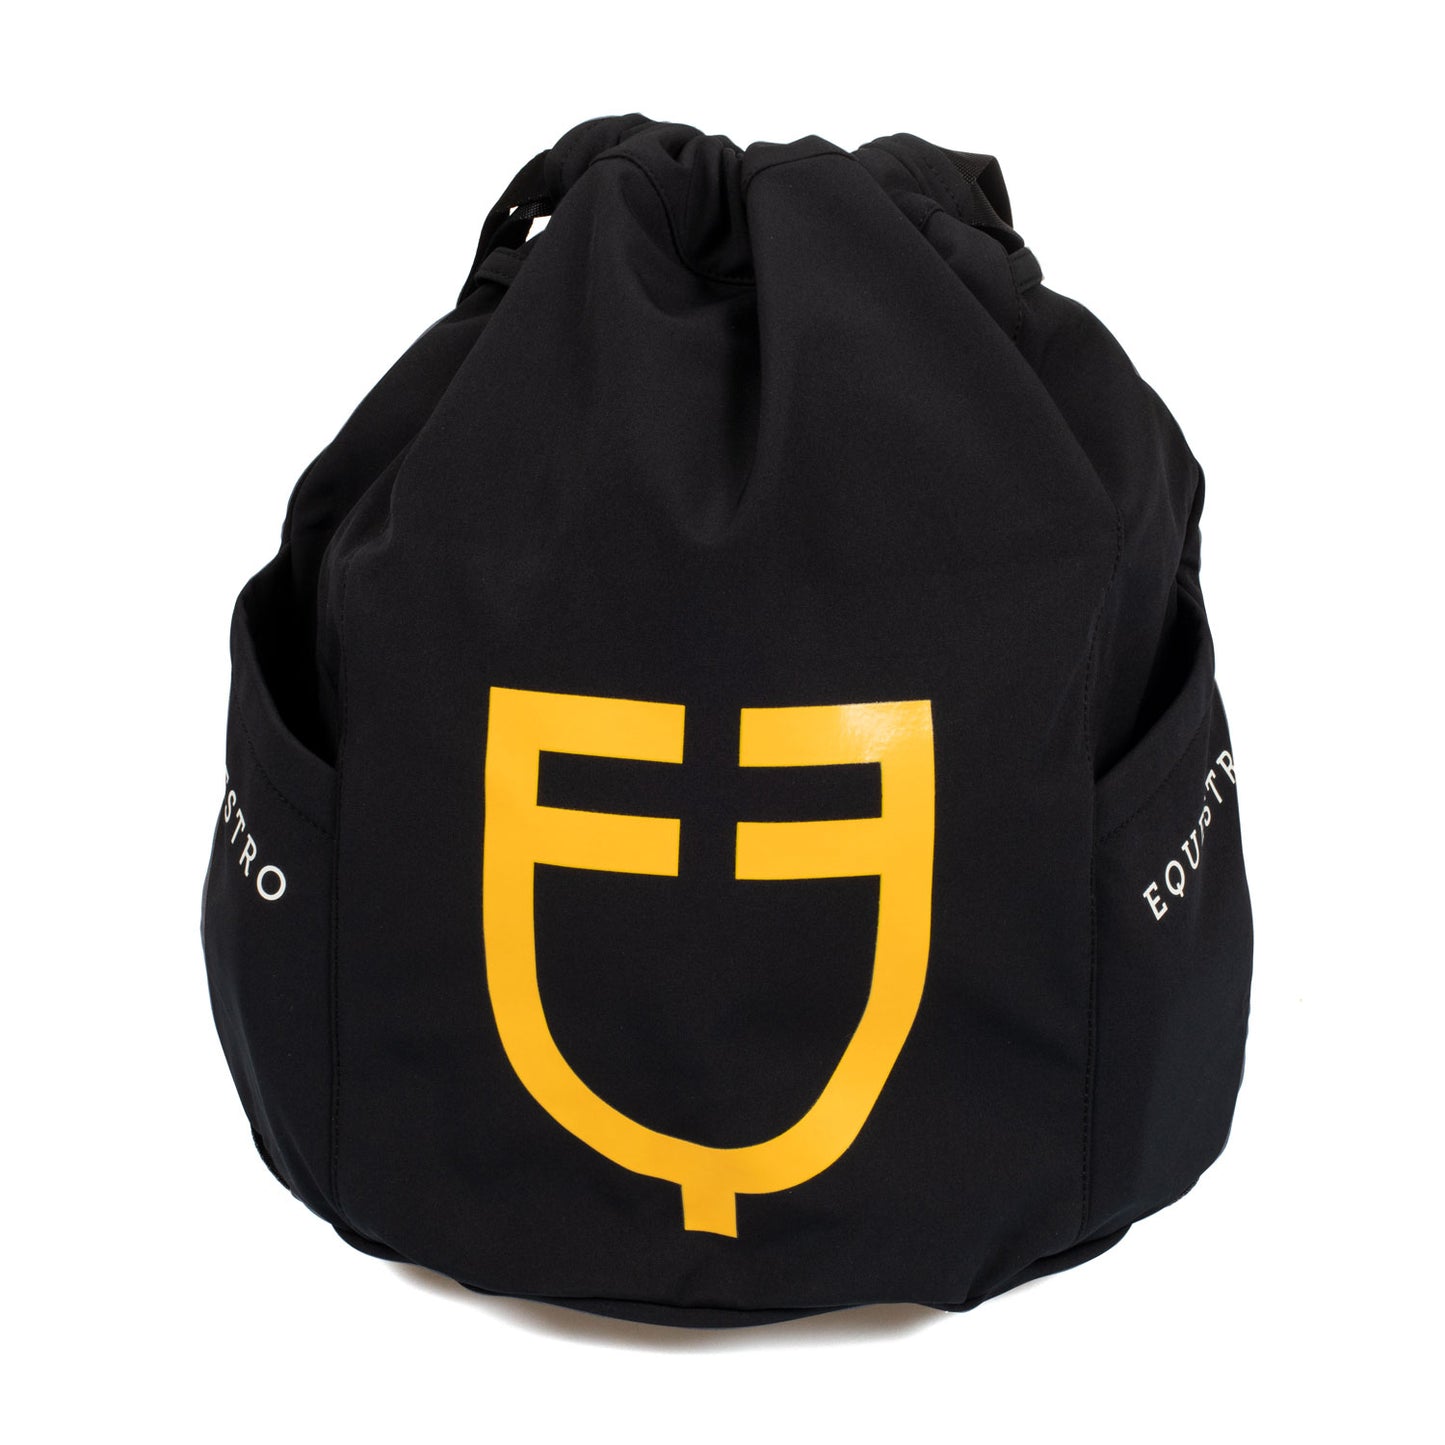 EQUESTRO - Helmet Bag with Side Pockets